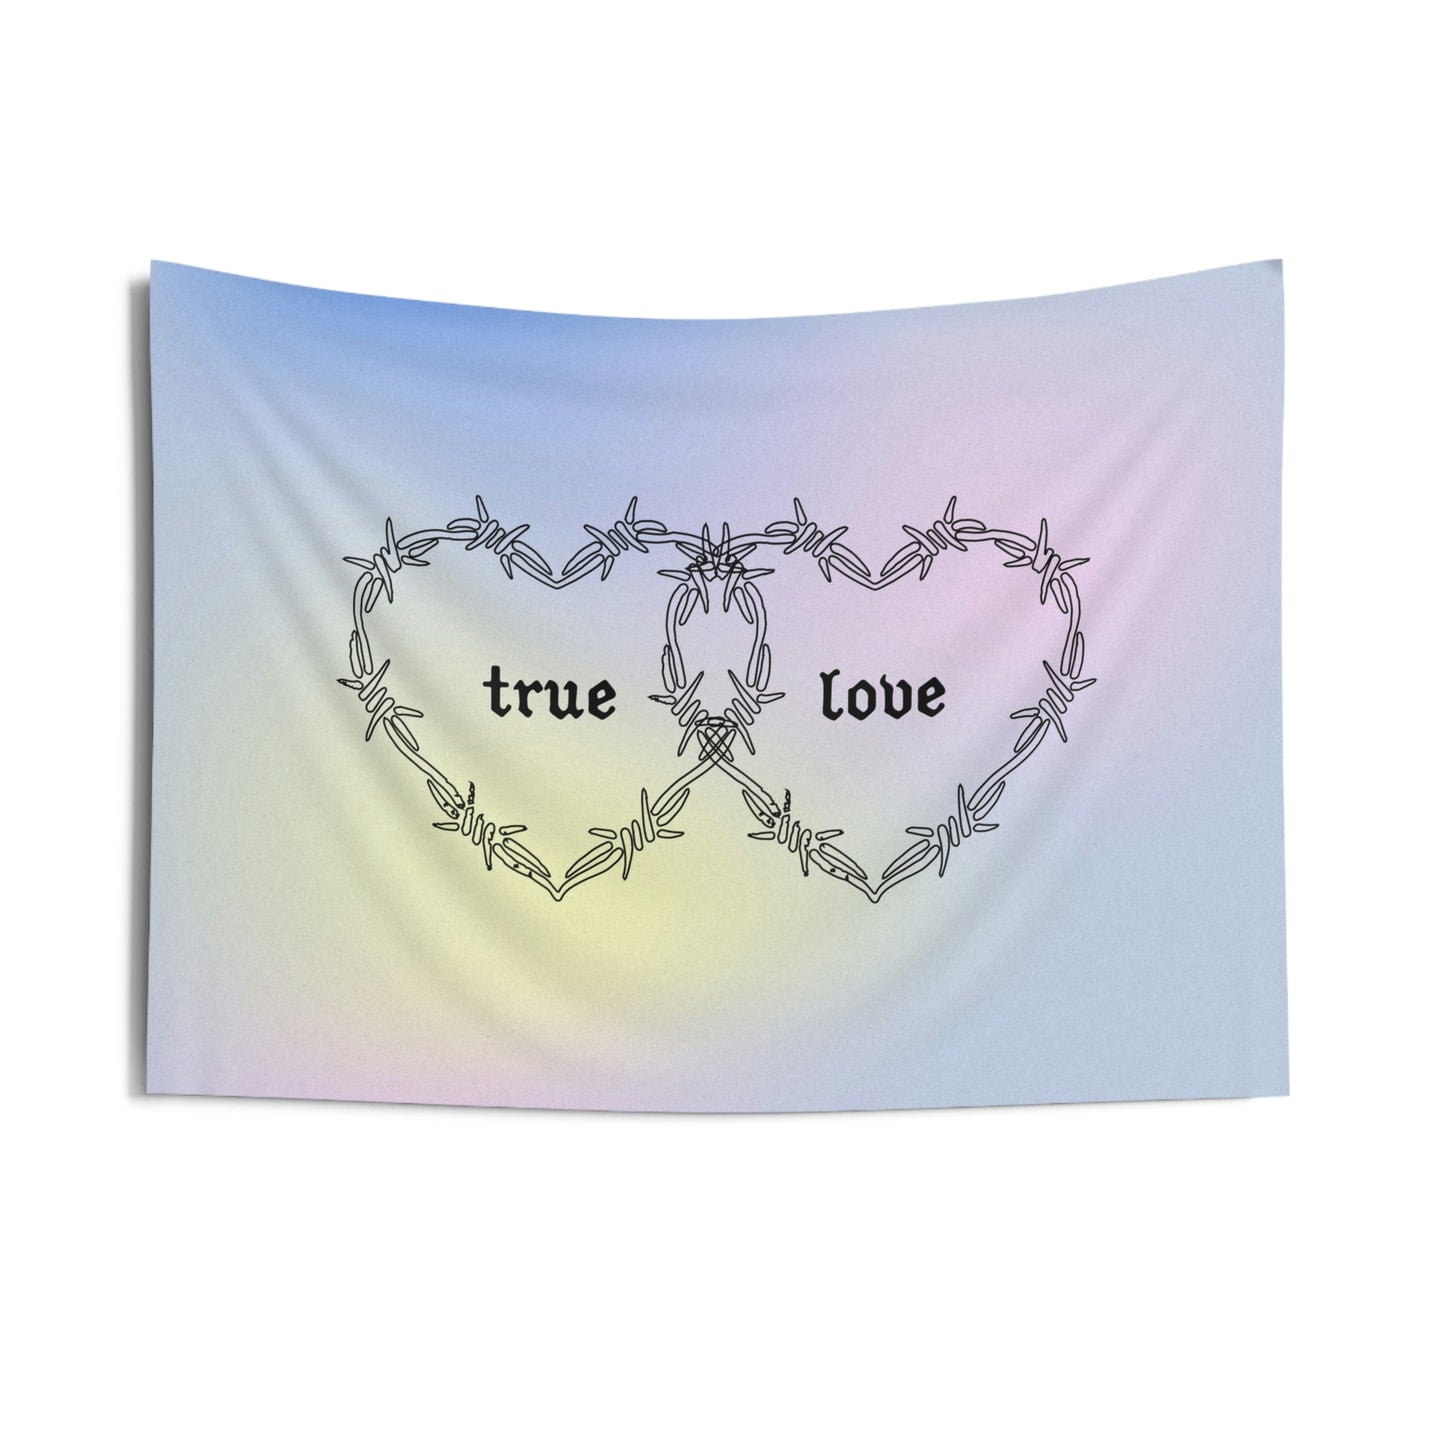 true love (tapestry)